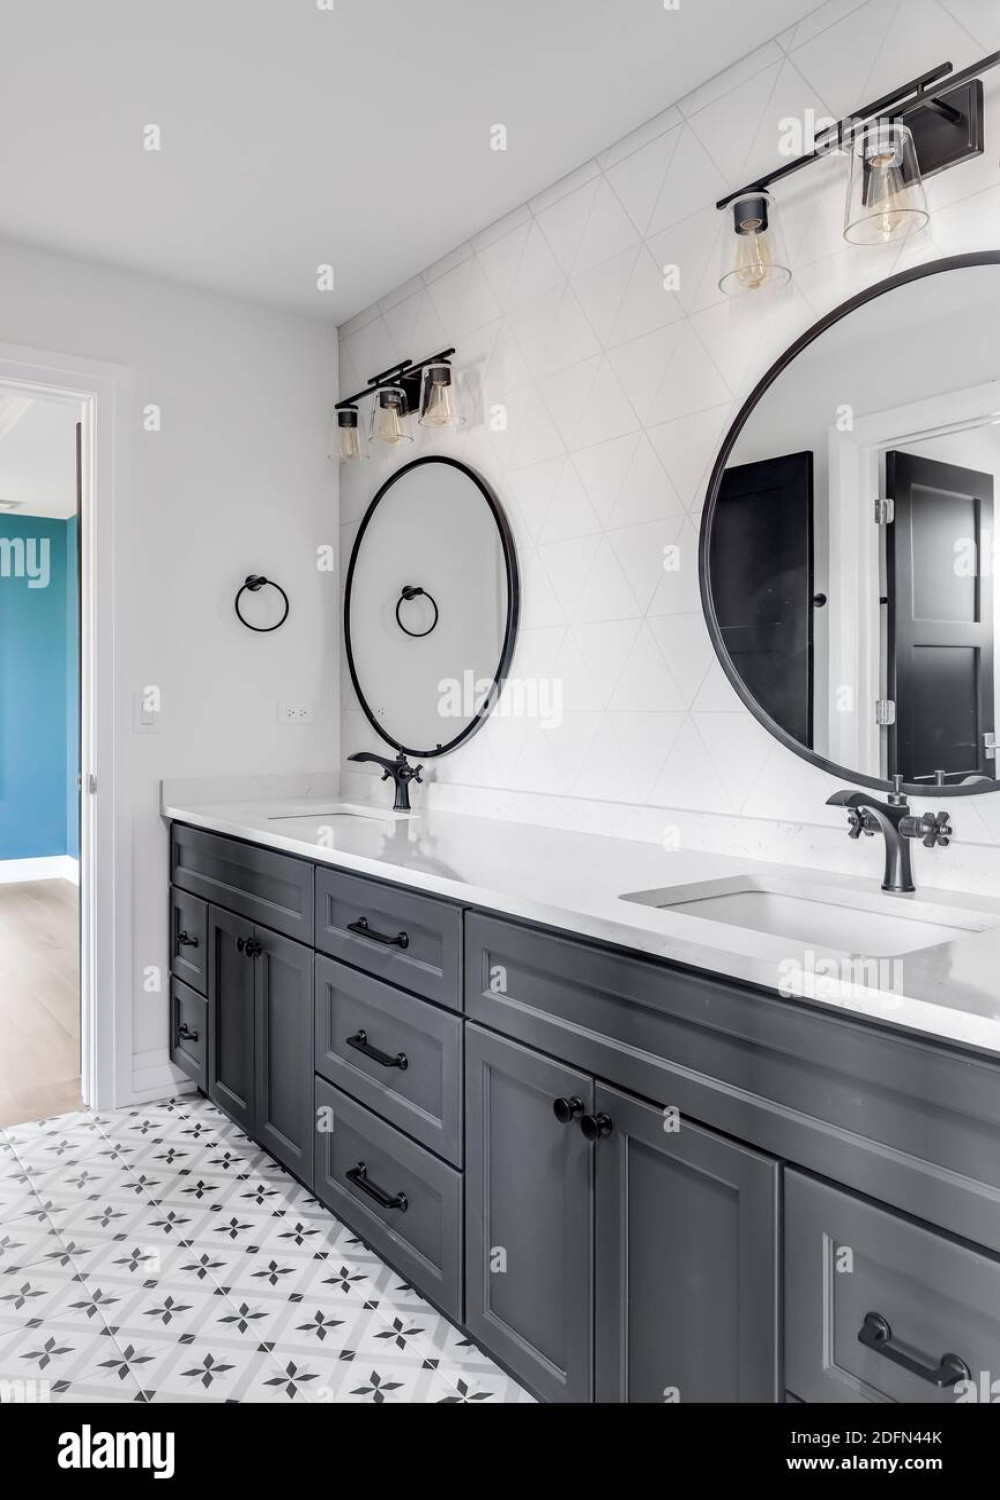 A beautiful bathroom with a dark grey vanity, circular mirrors